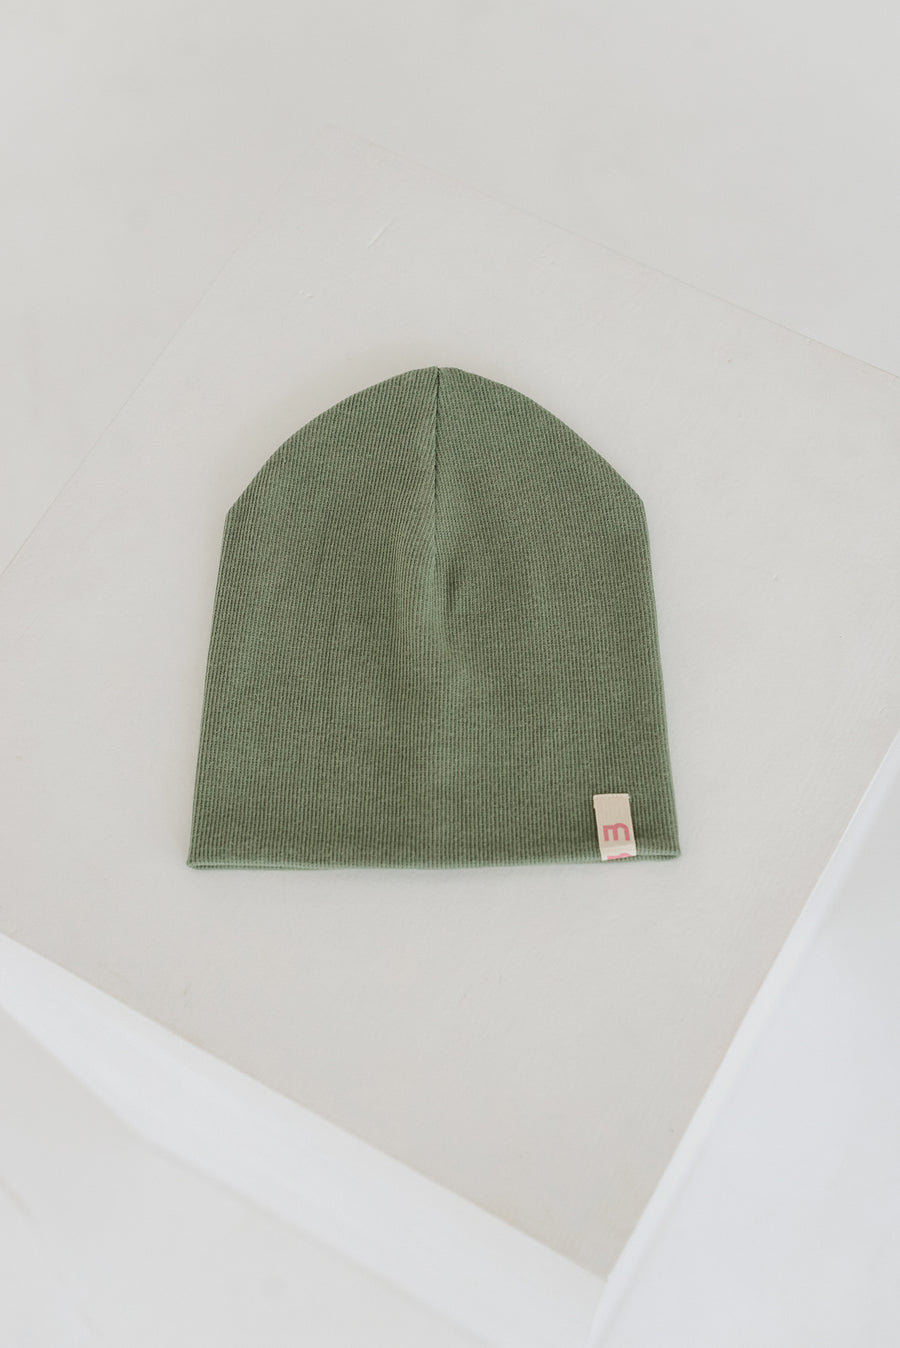 olive green hat